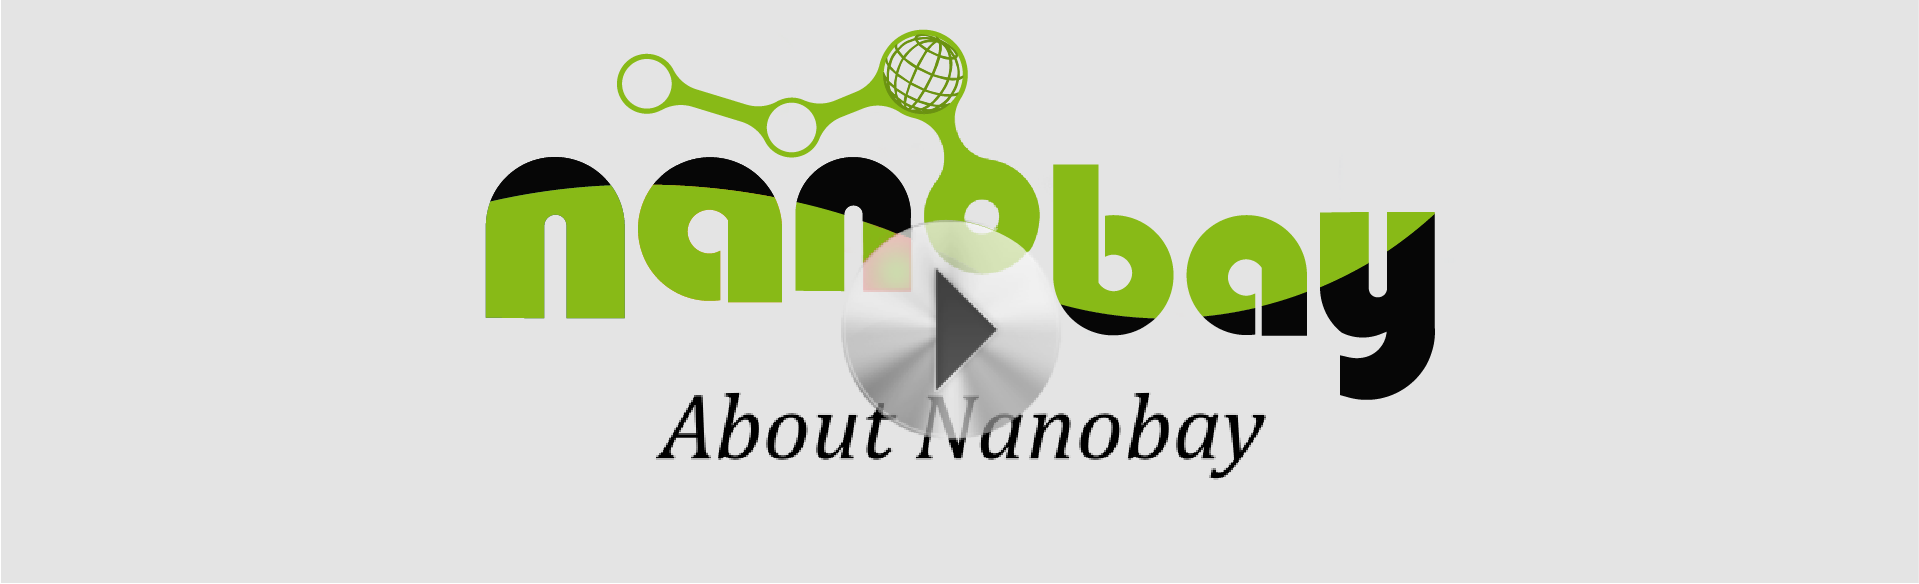 About Nanobay (Menu item)